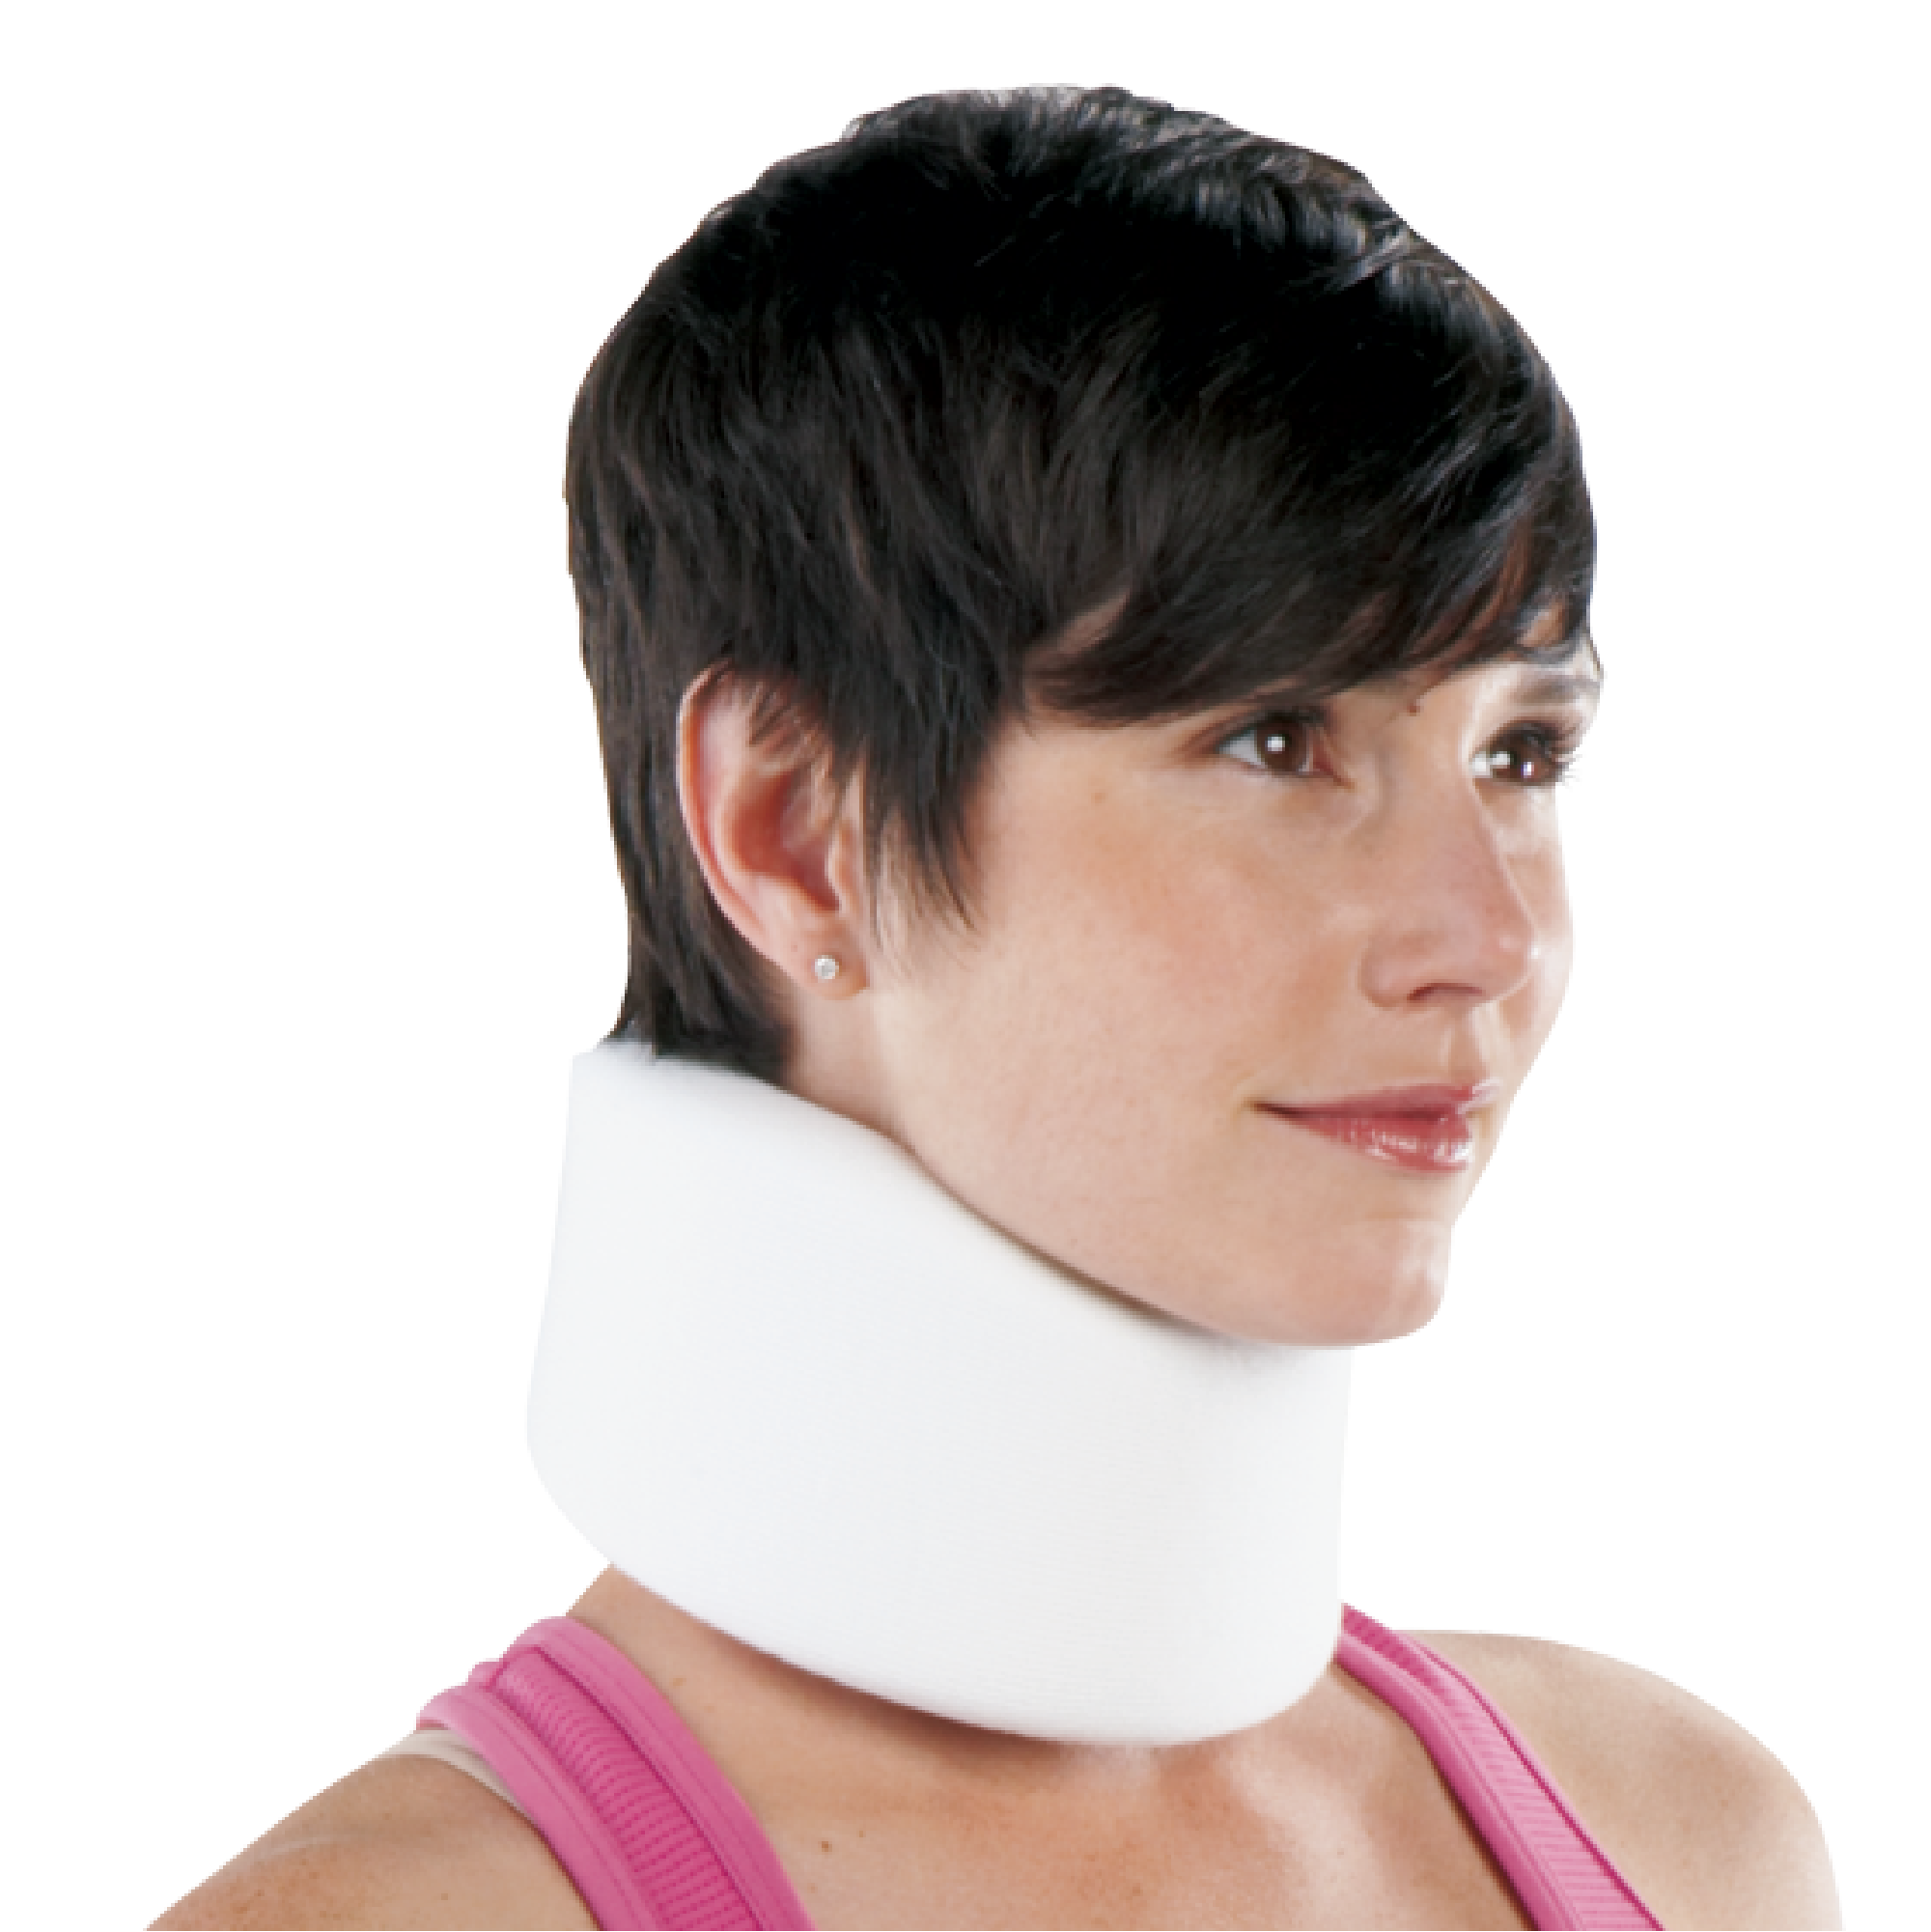 Foam Cervical Collar for neck support